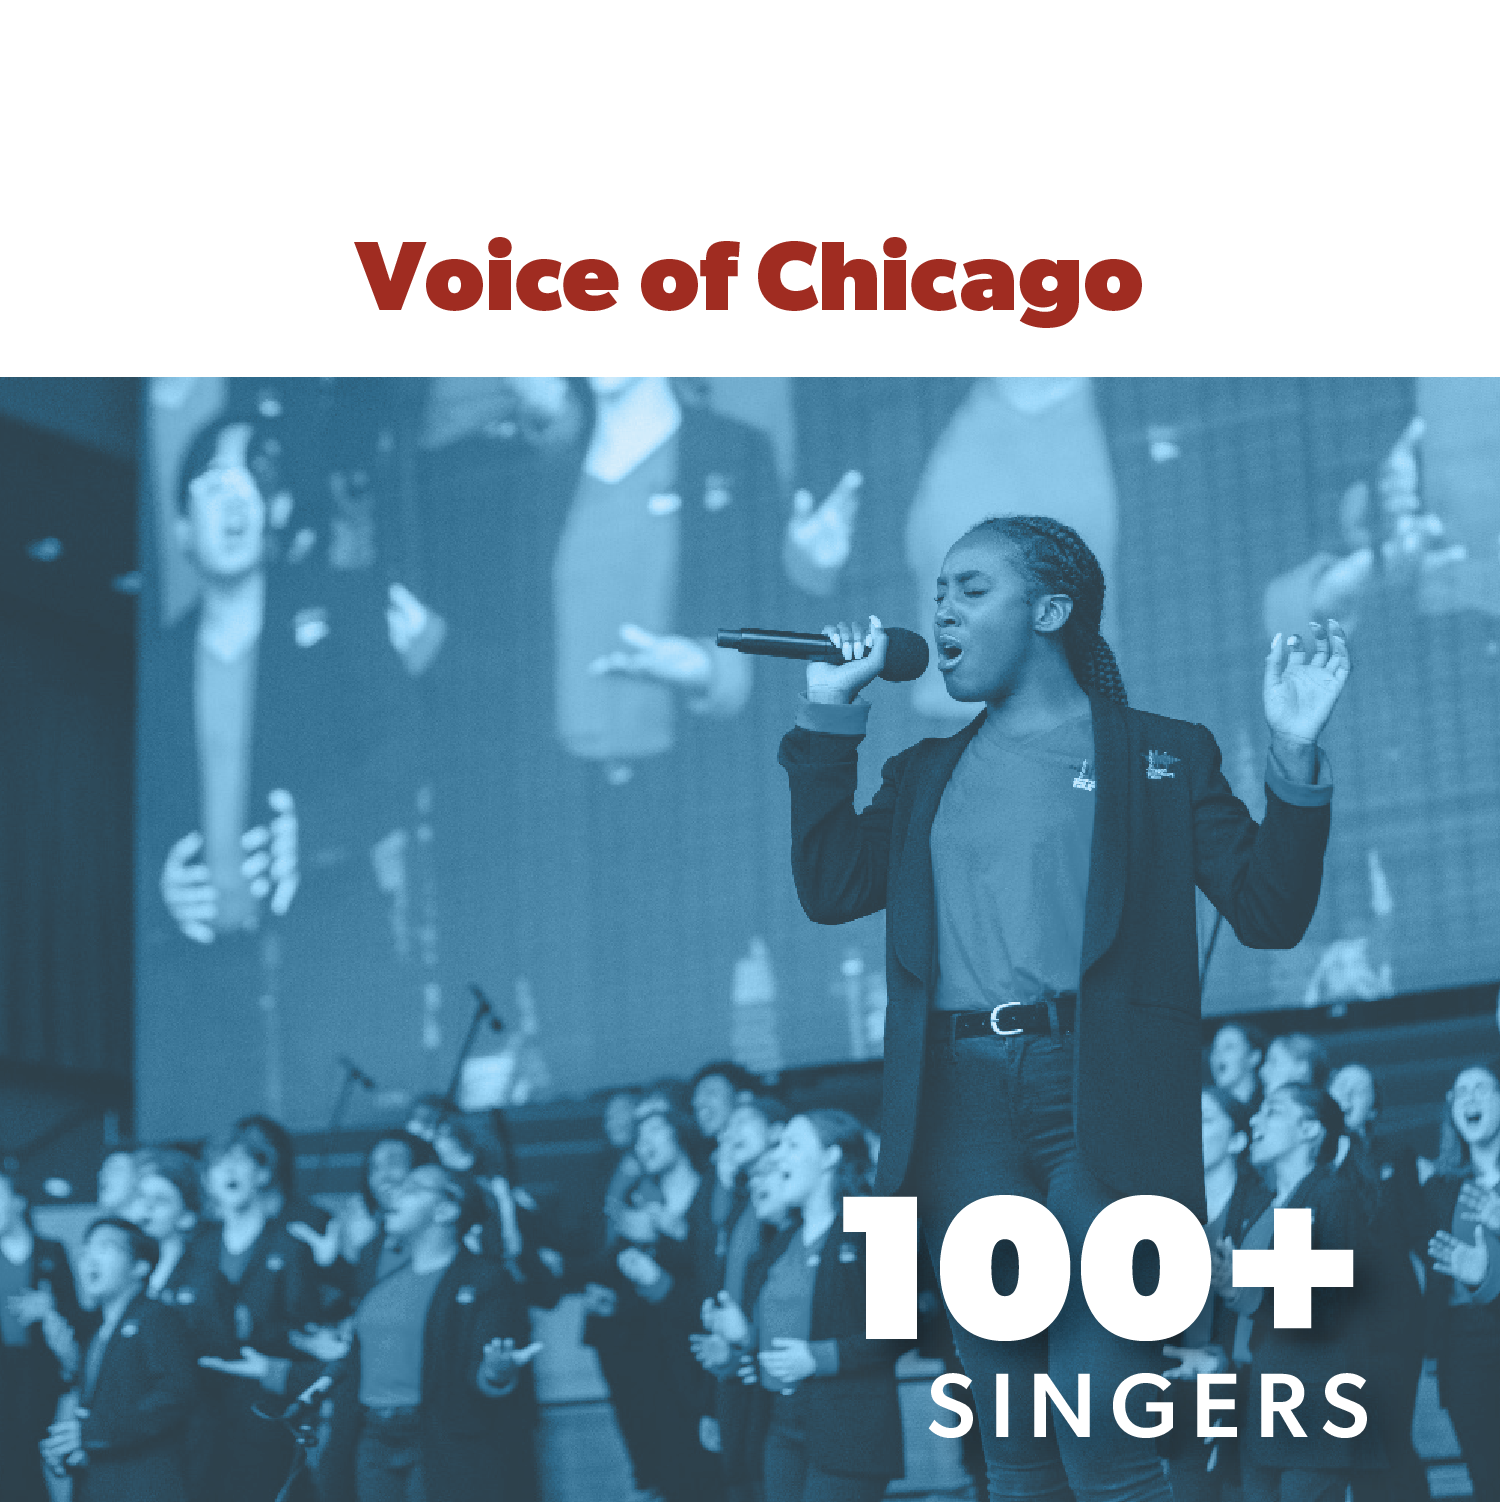 Voice of Chicago